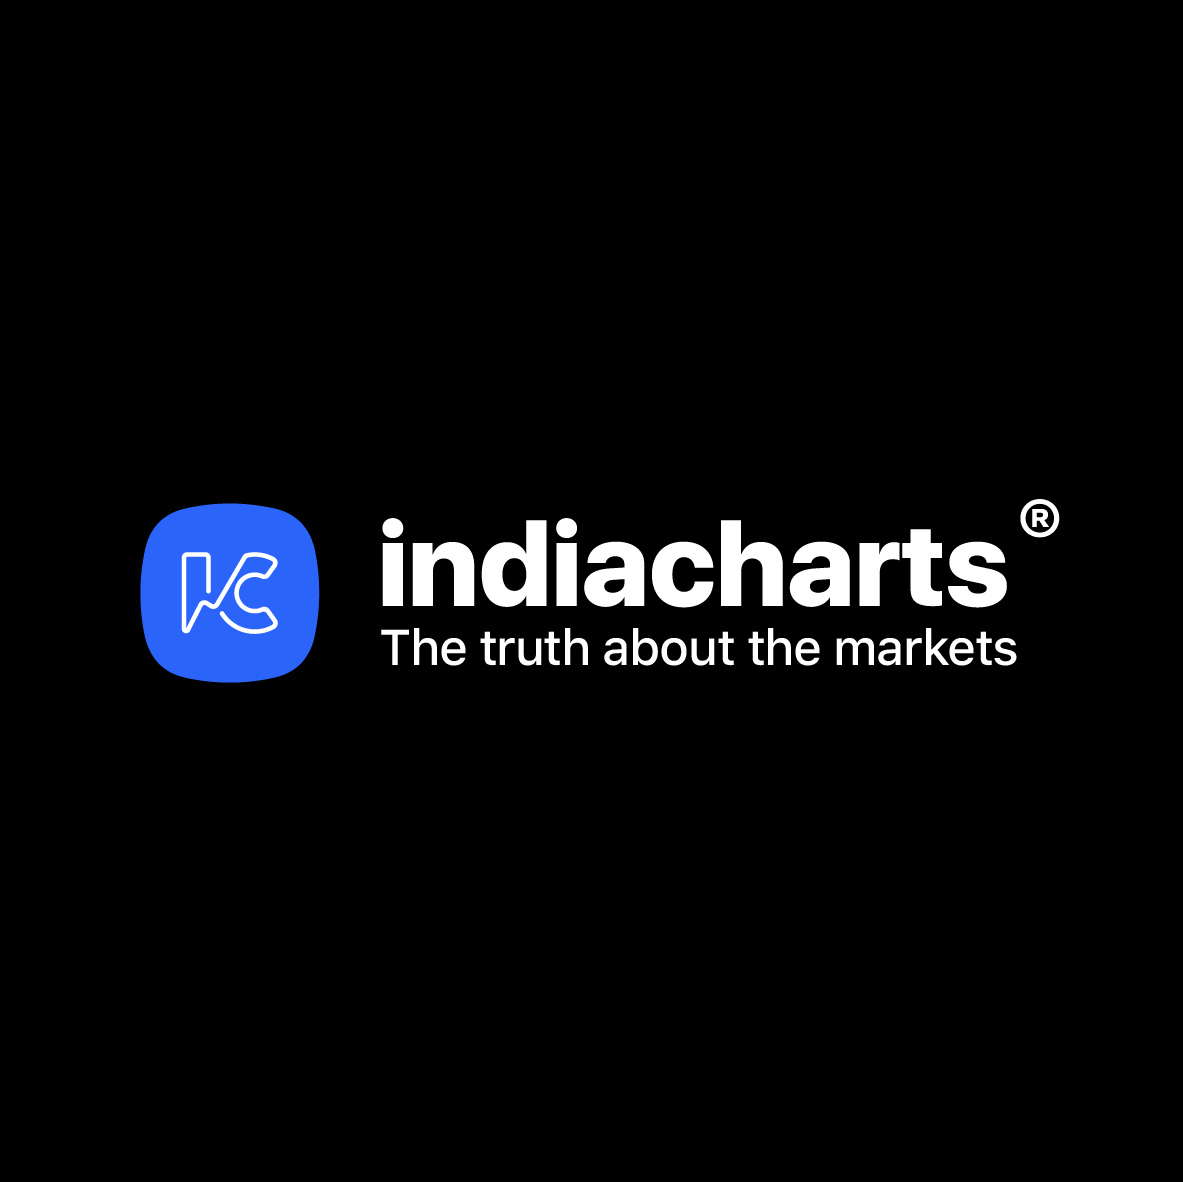 Indiacharts